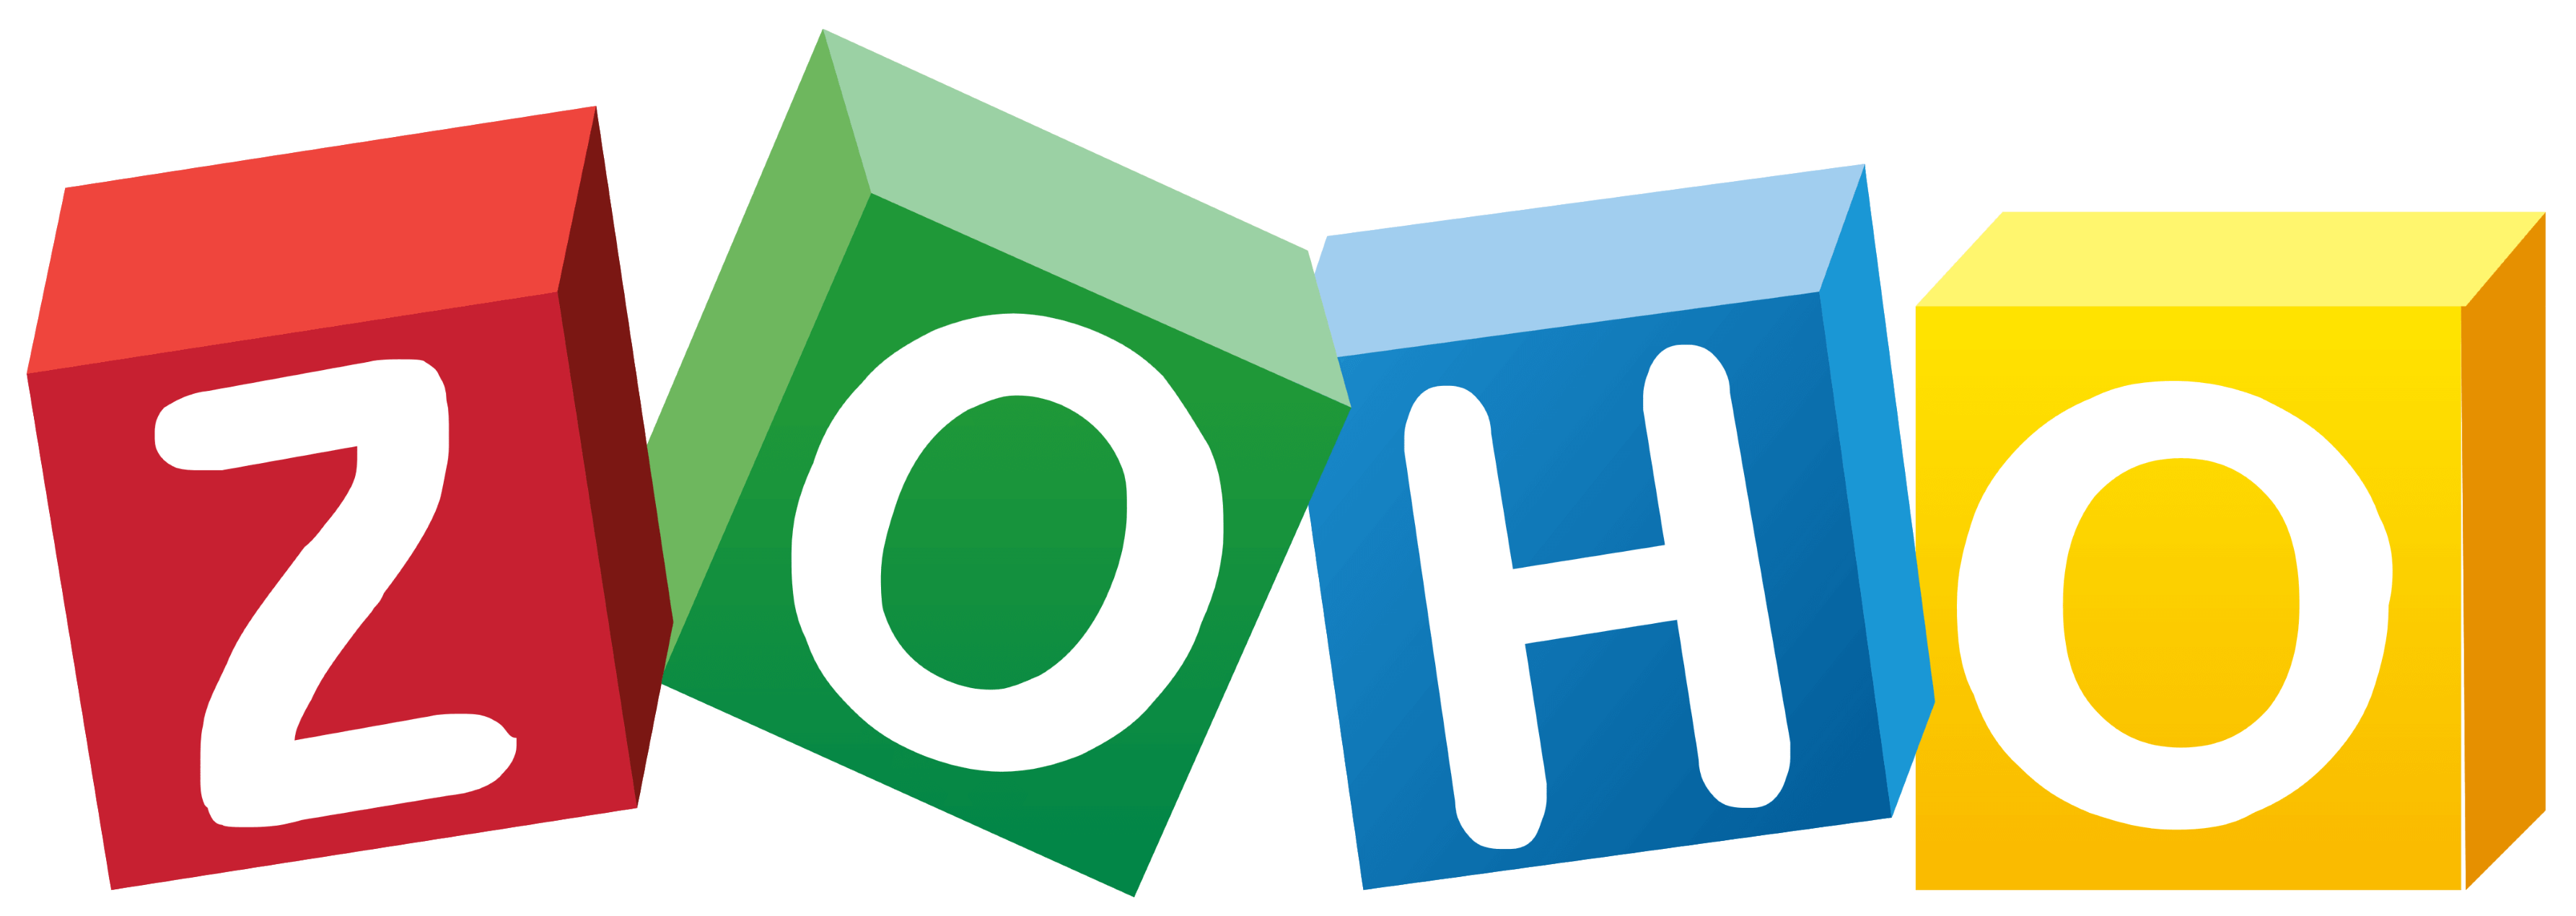 Zoho logo, logotype